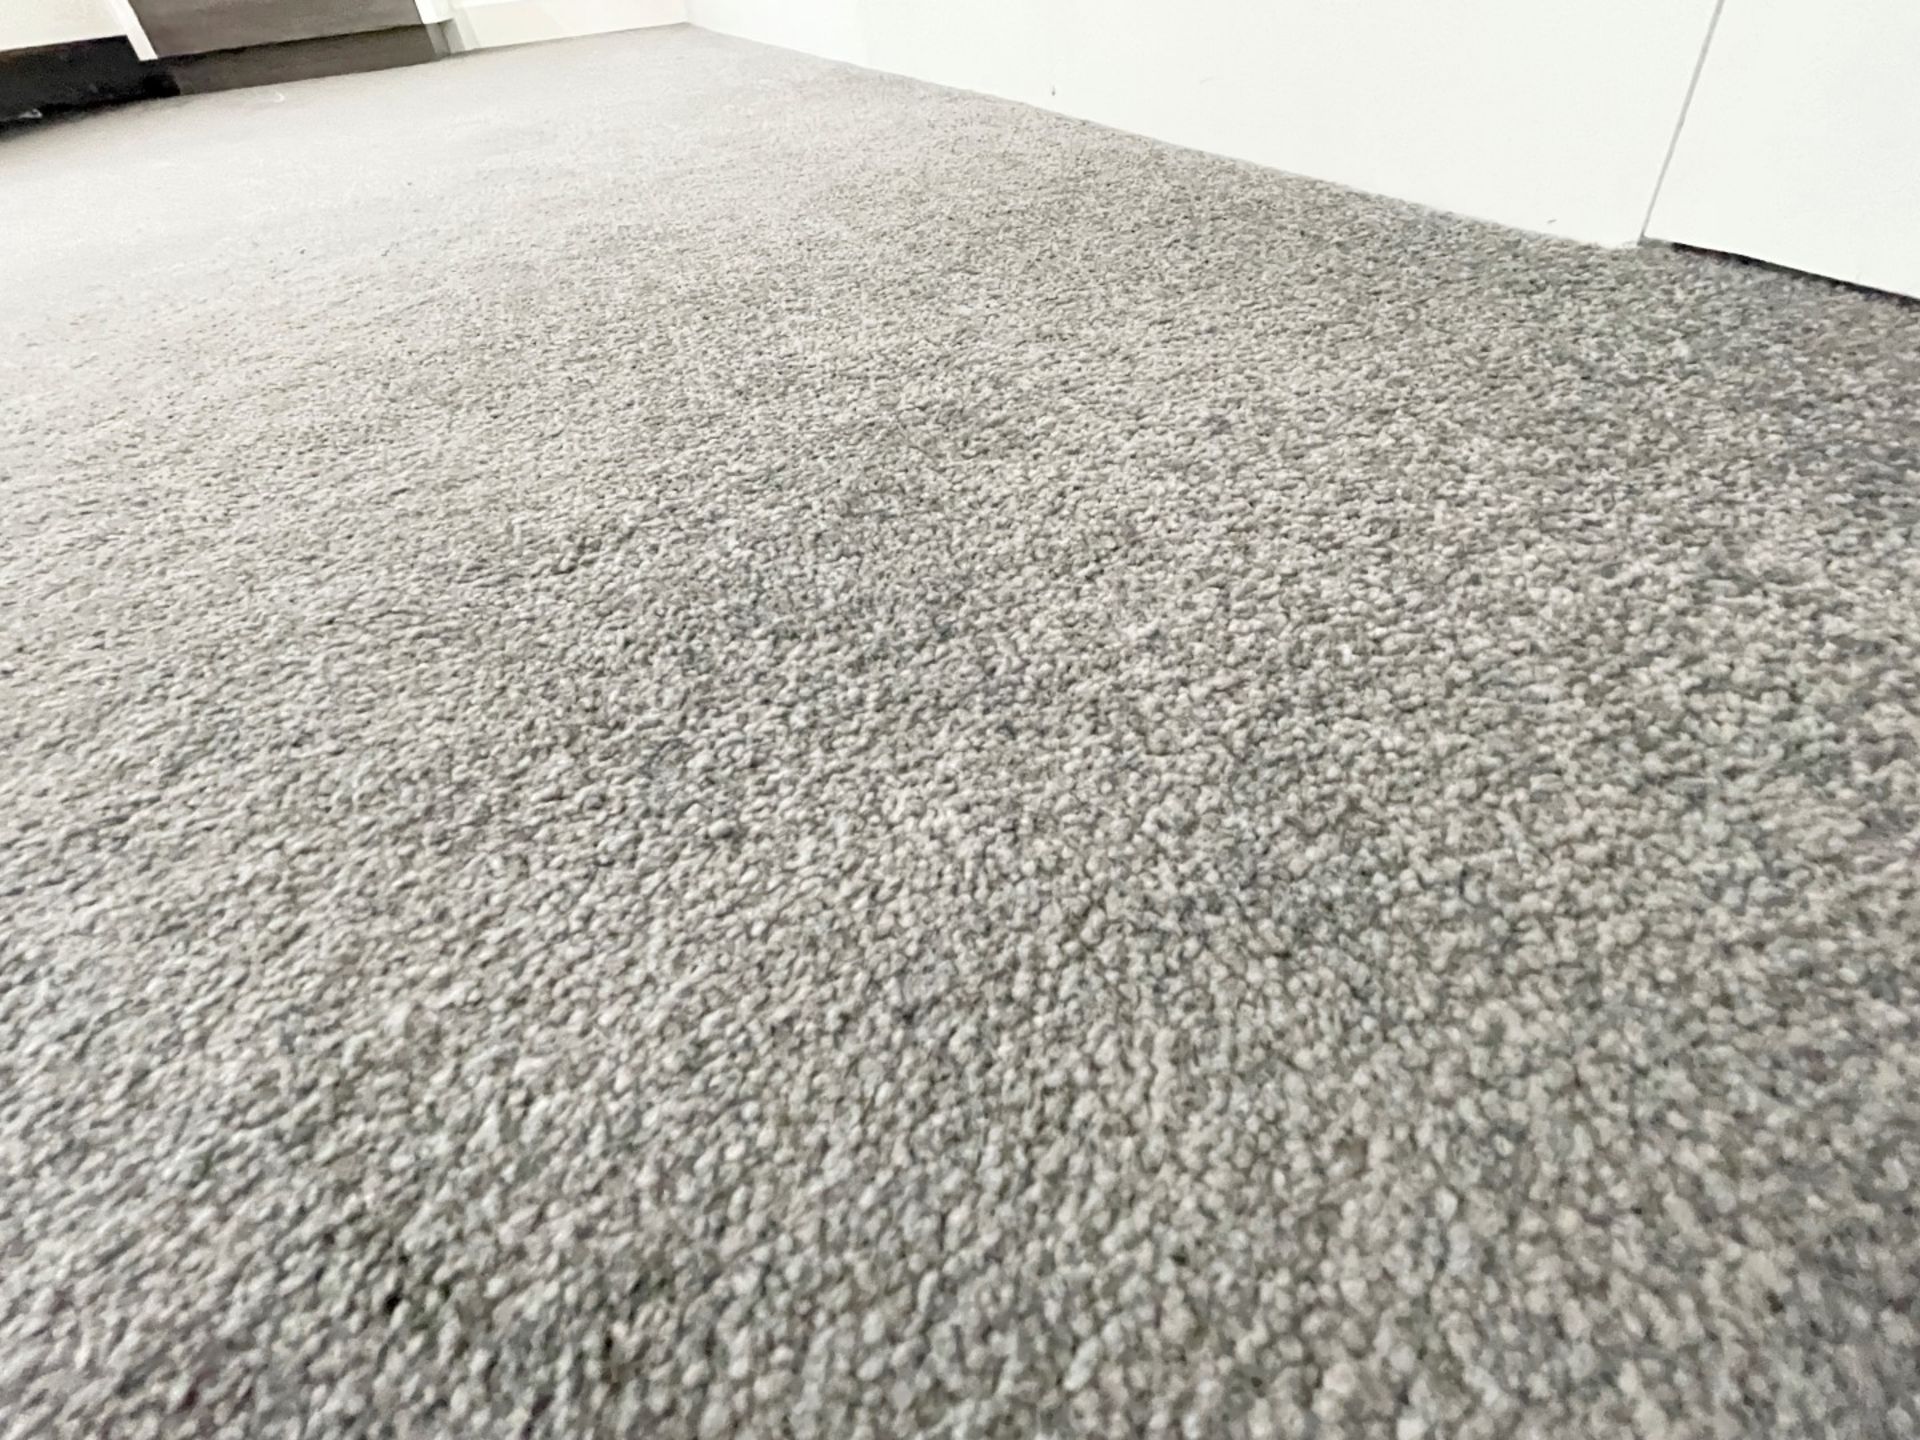 1 x Premium Fitted Bedroom Carpet In Grey (4.6 x 3.6m) - Ref: FRNT-BD(A)/1stFLR - CL742 - NO VAT - Image 2 of 4